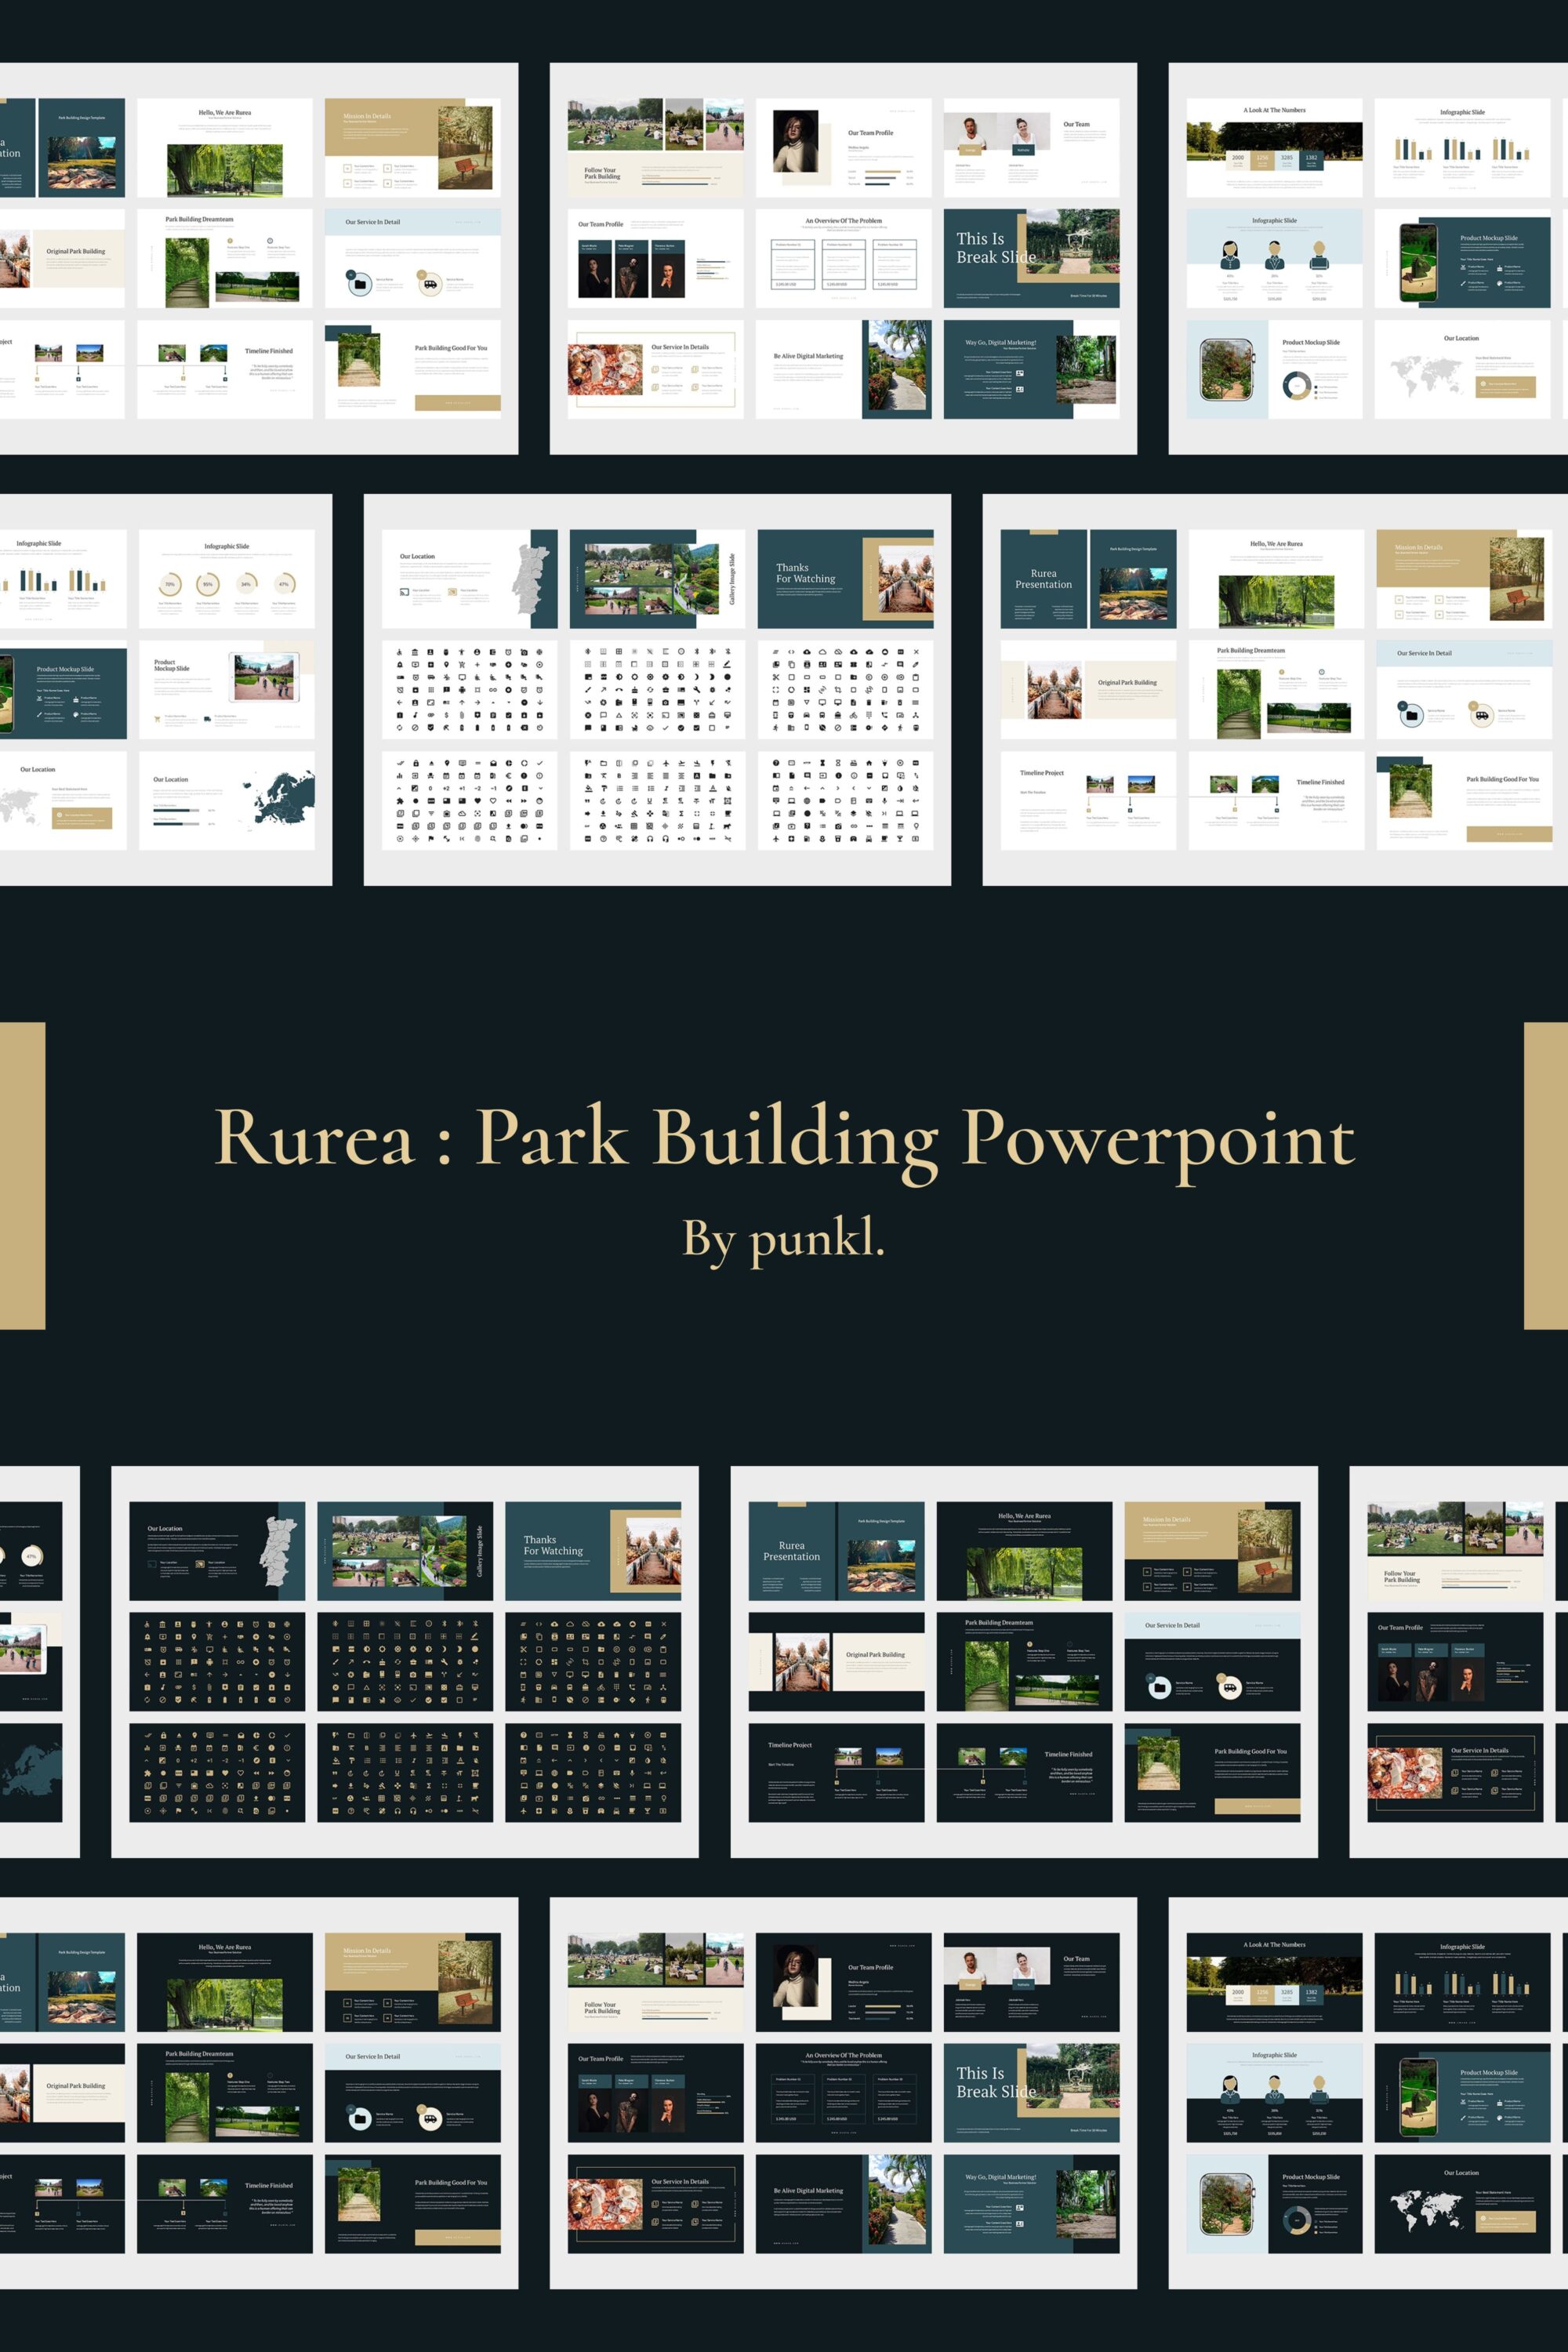 rurea park building powerpoint 03